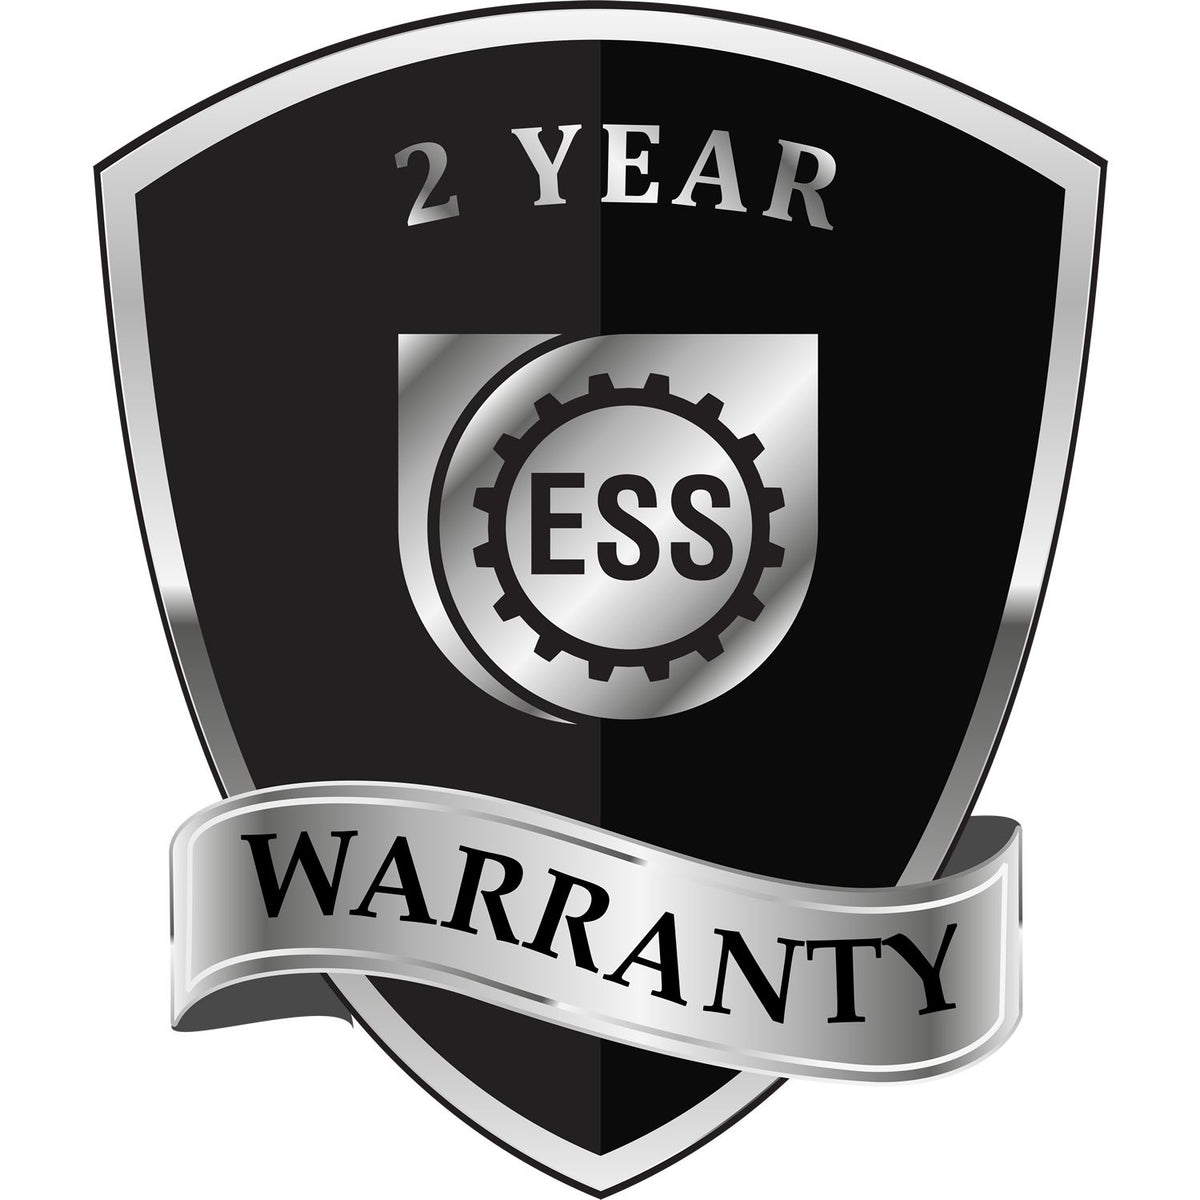 A black and silver badge or emblem showing warranty information for the Hybrid Virginia Landscape Architect Seal